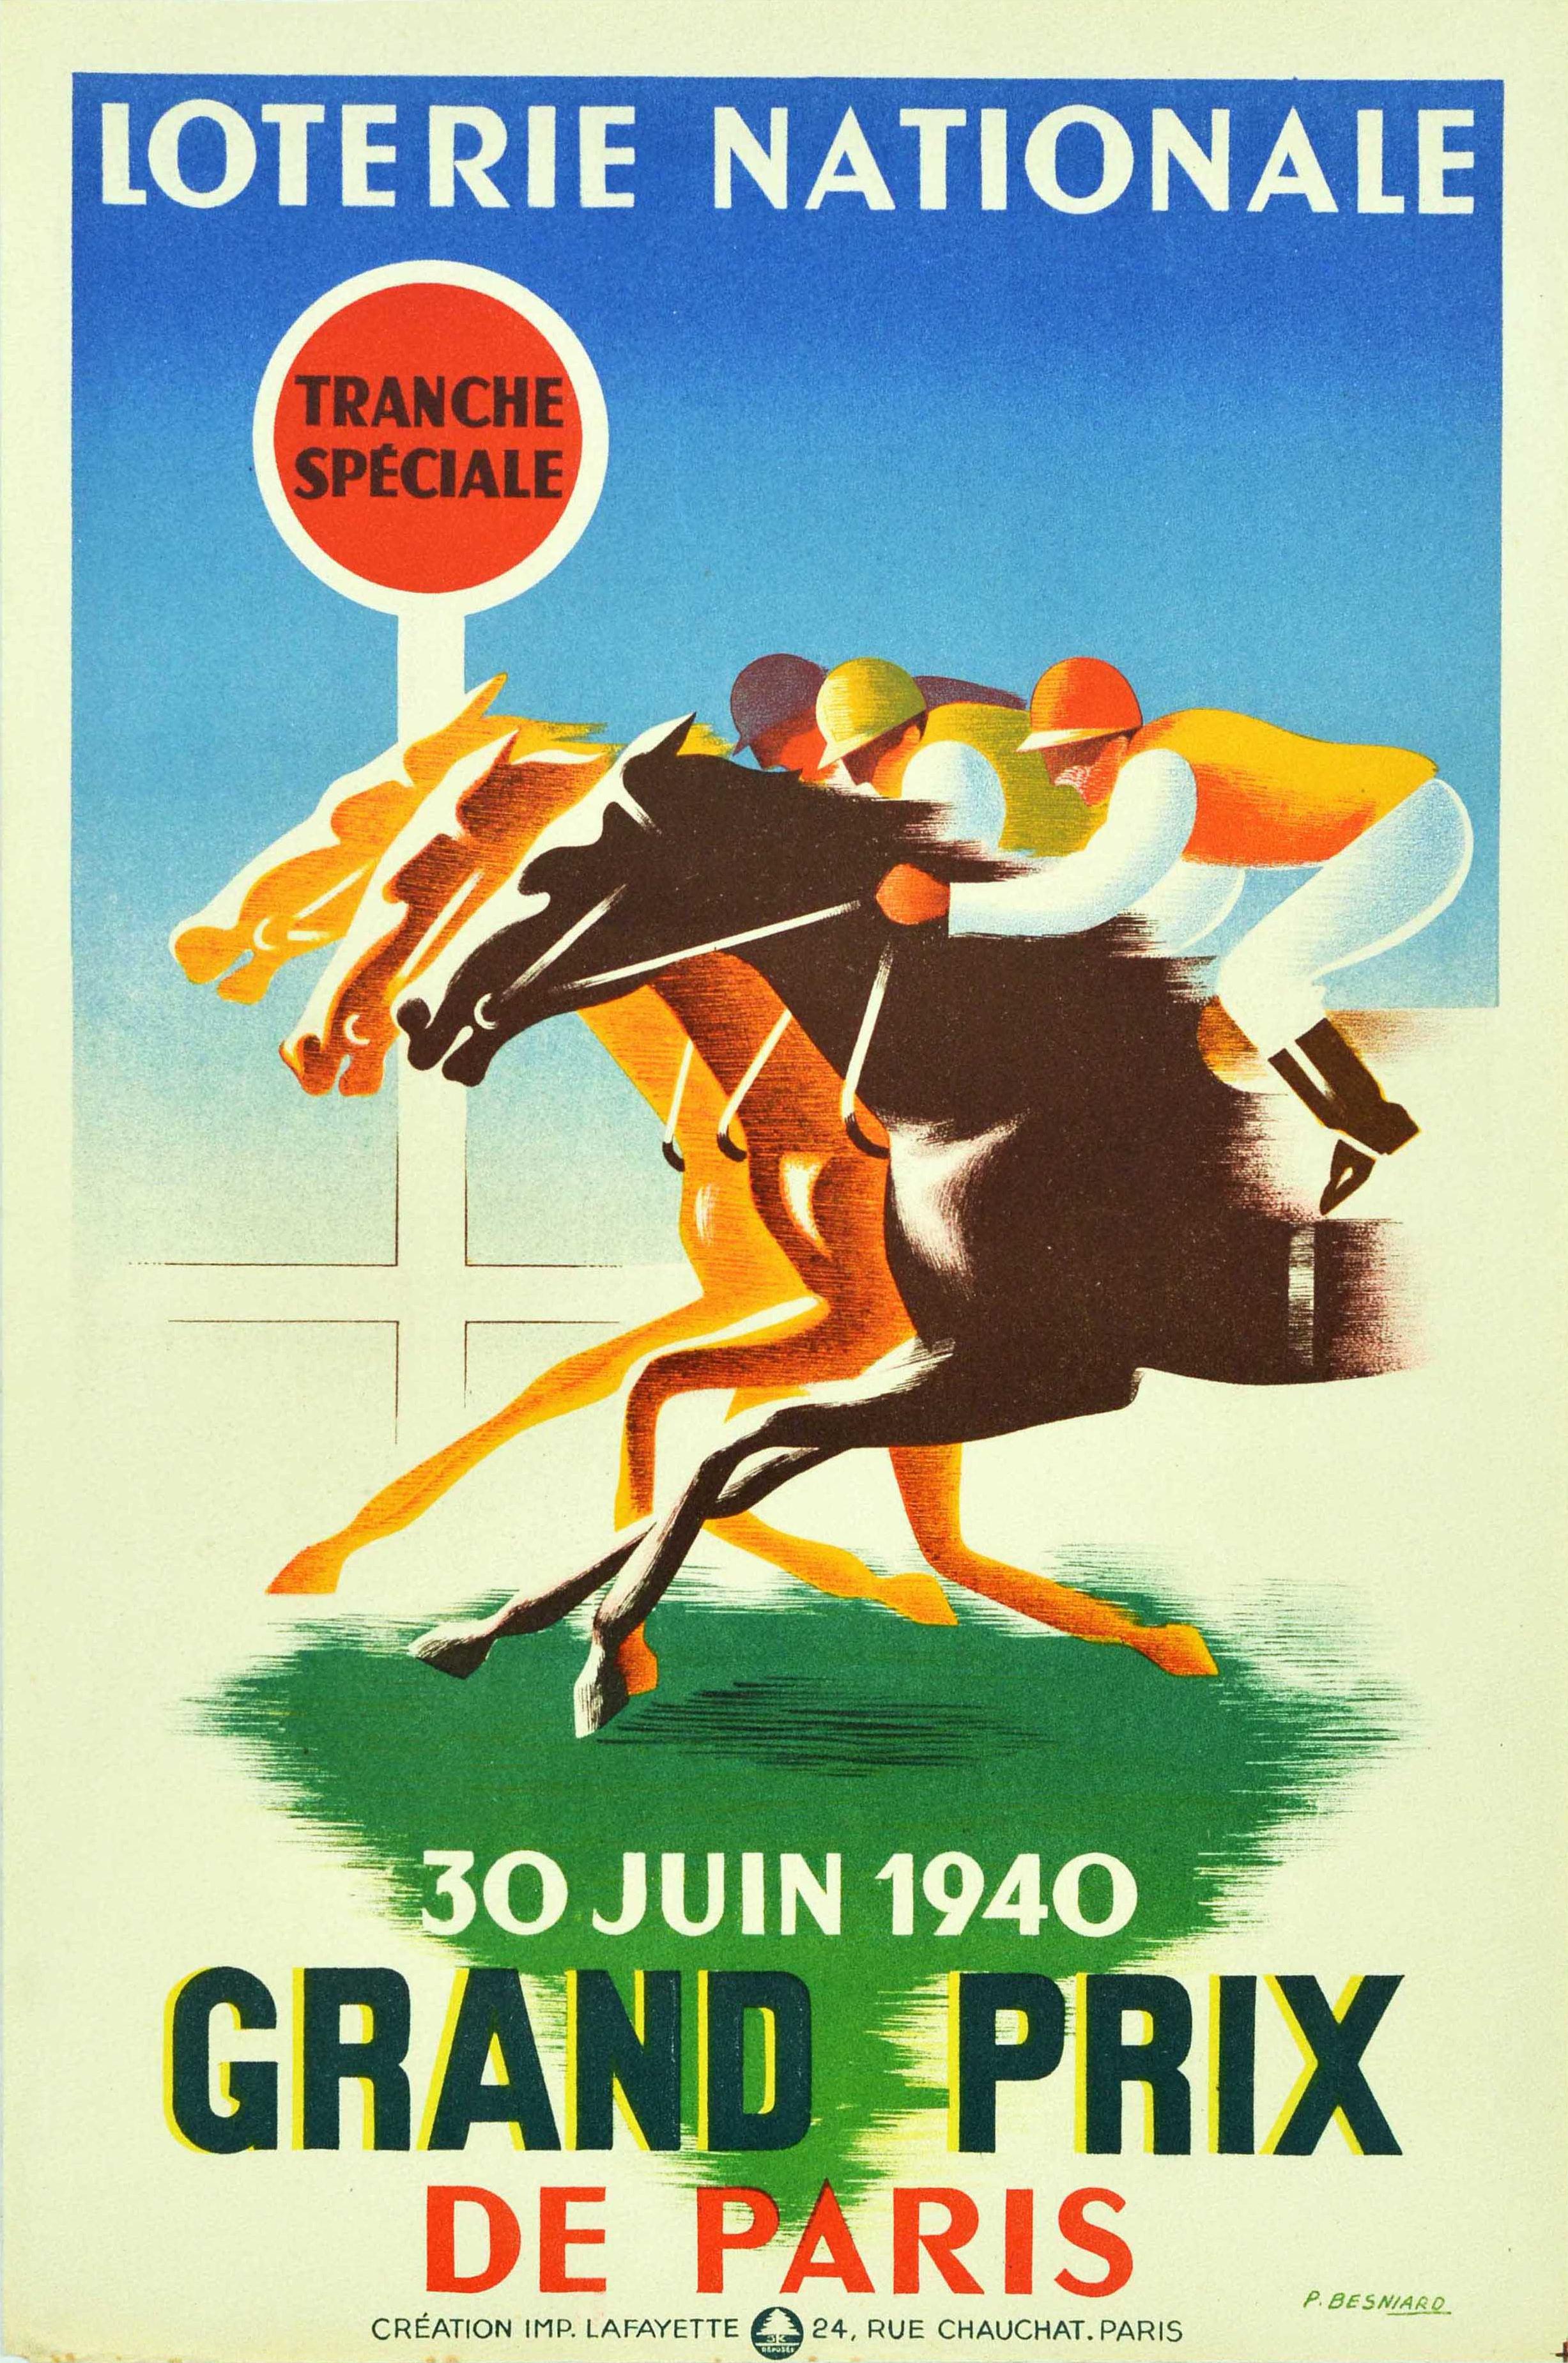 Pierre Besniard Print - Original Vintage Advertising Poster Loterie Nationale Grand Prix Horse Racing